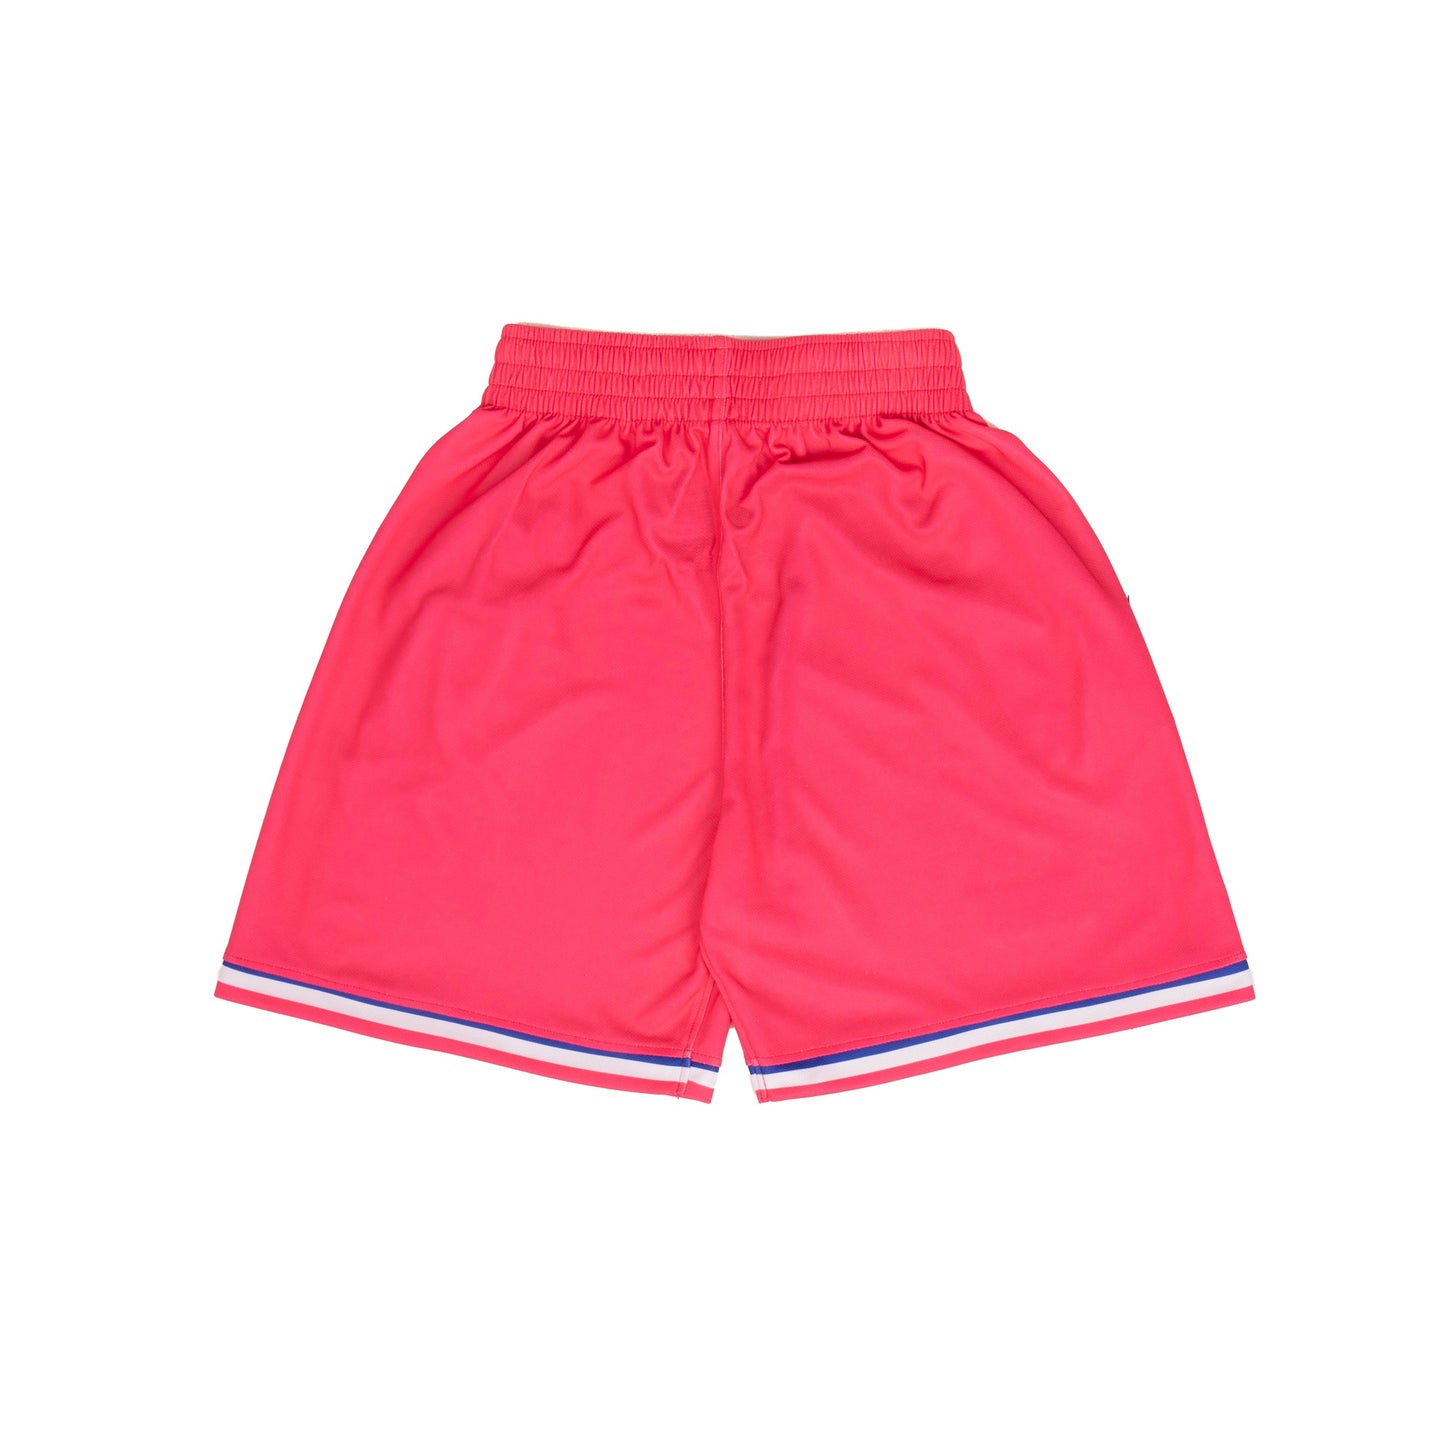 AZA Short Pants Basketball Box Multicolour - Pink